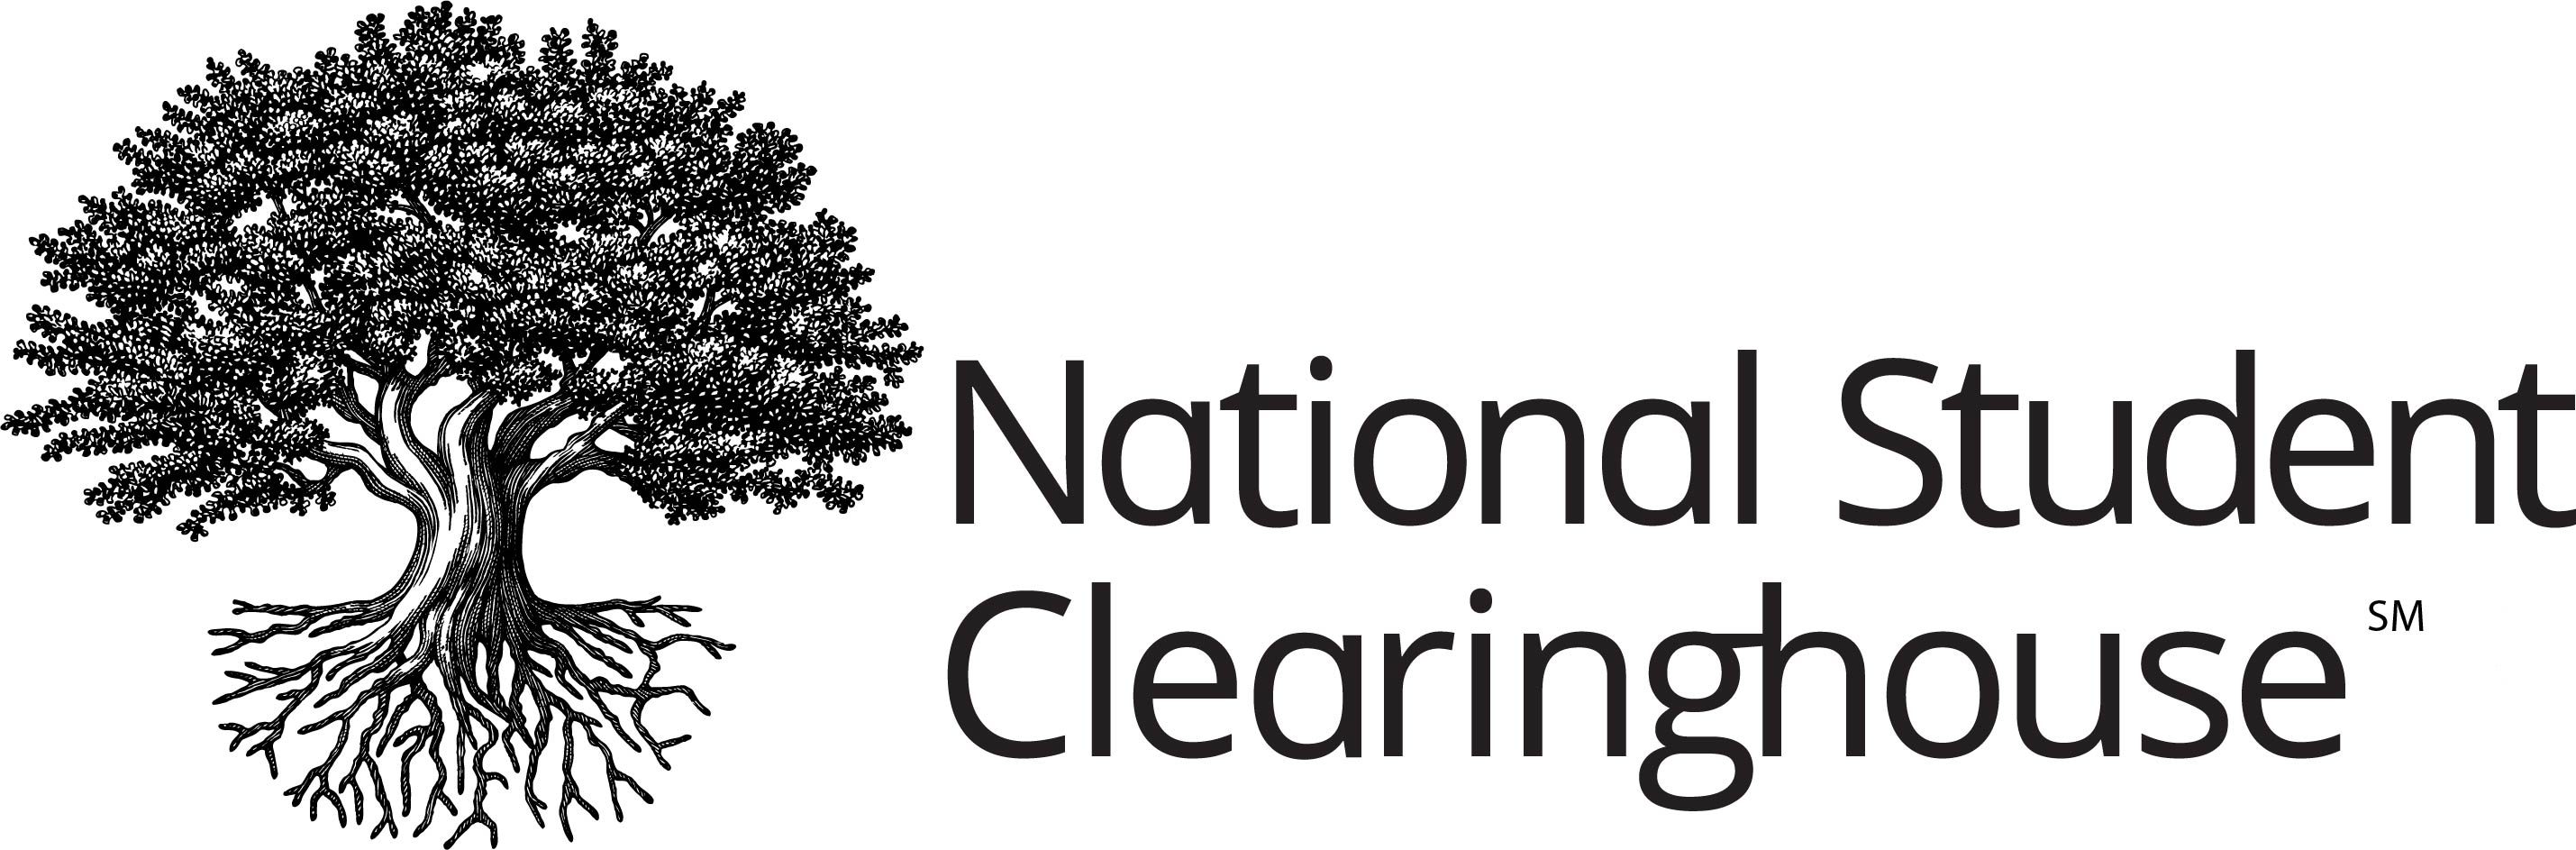 NSC logo w tree high detail